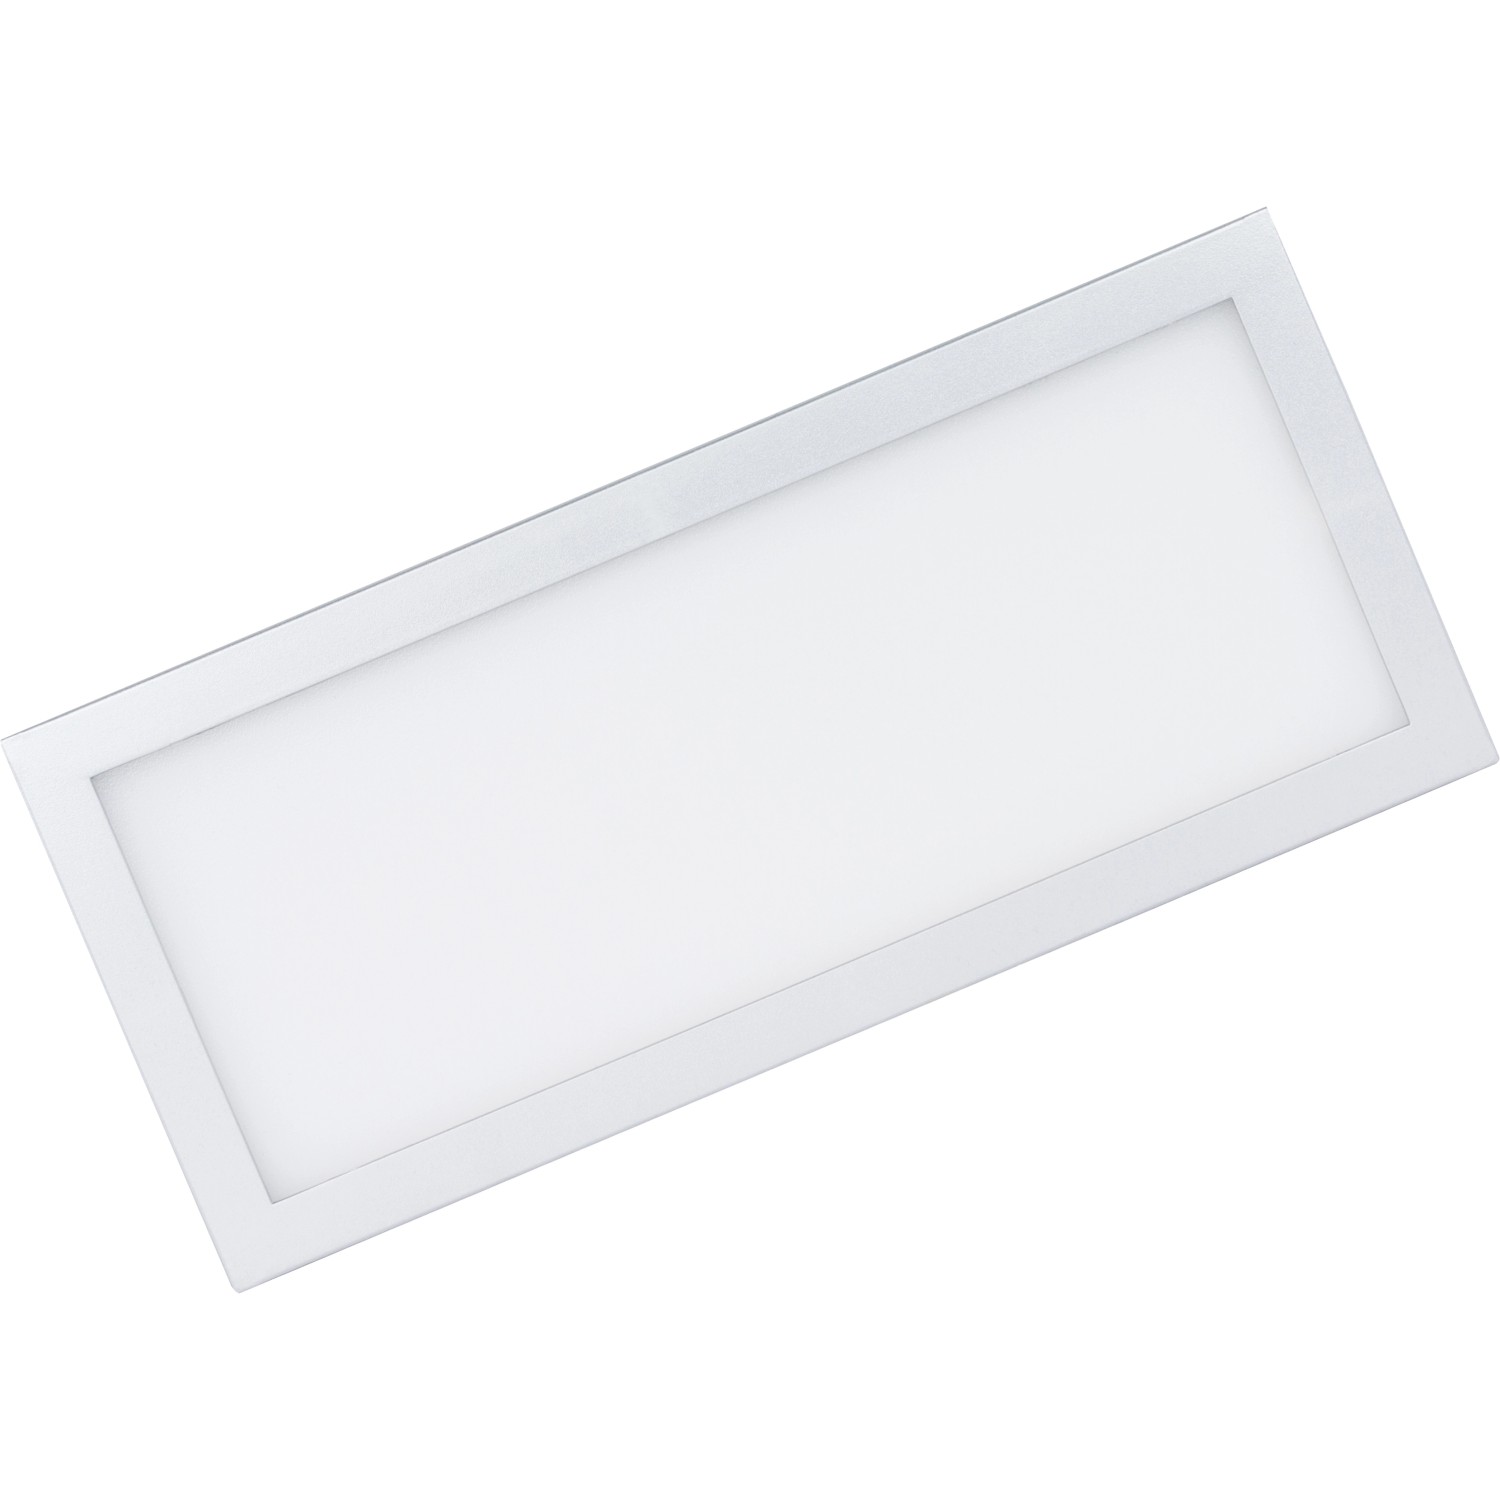 REV Ritter LED-Unterbauleuchte PanelLight 23 cm 250 lm Farbwechsel Dimmbar Weiß